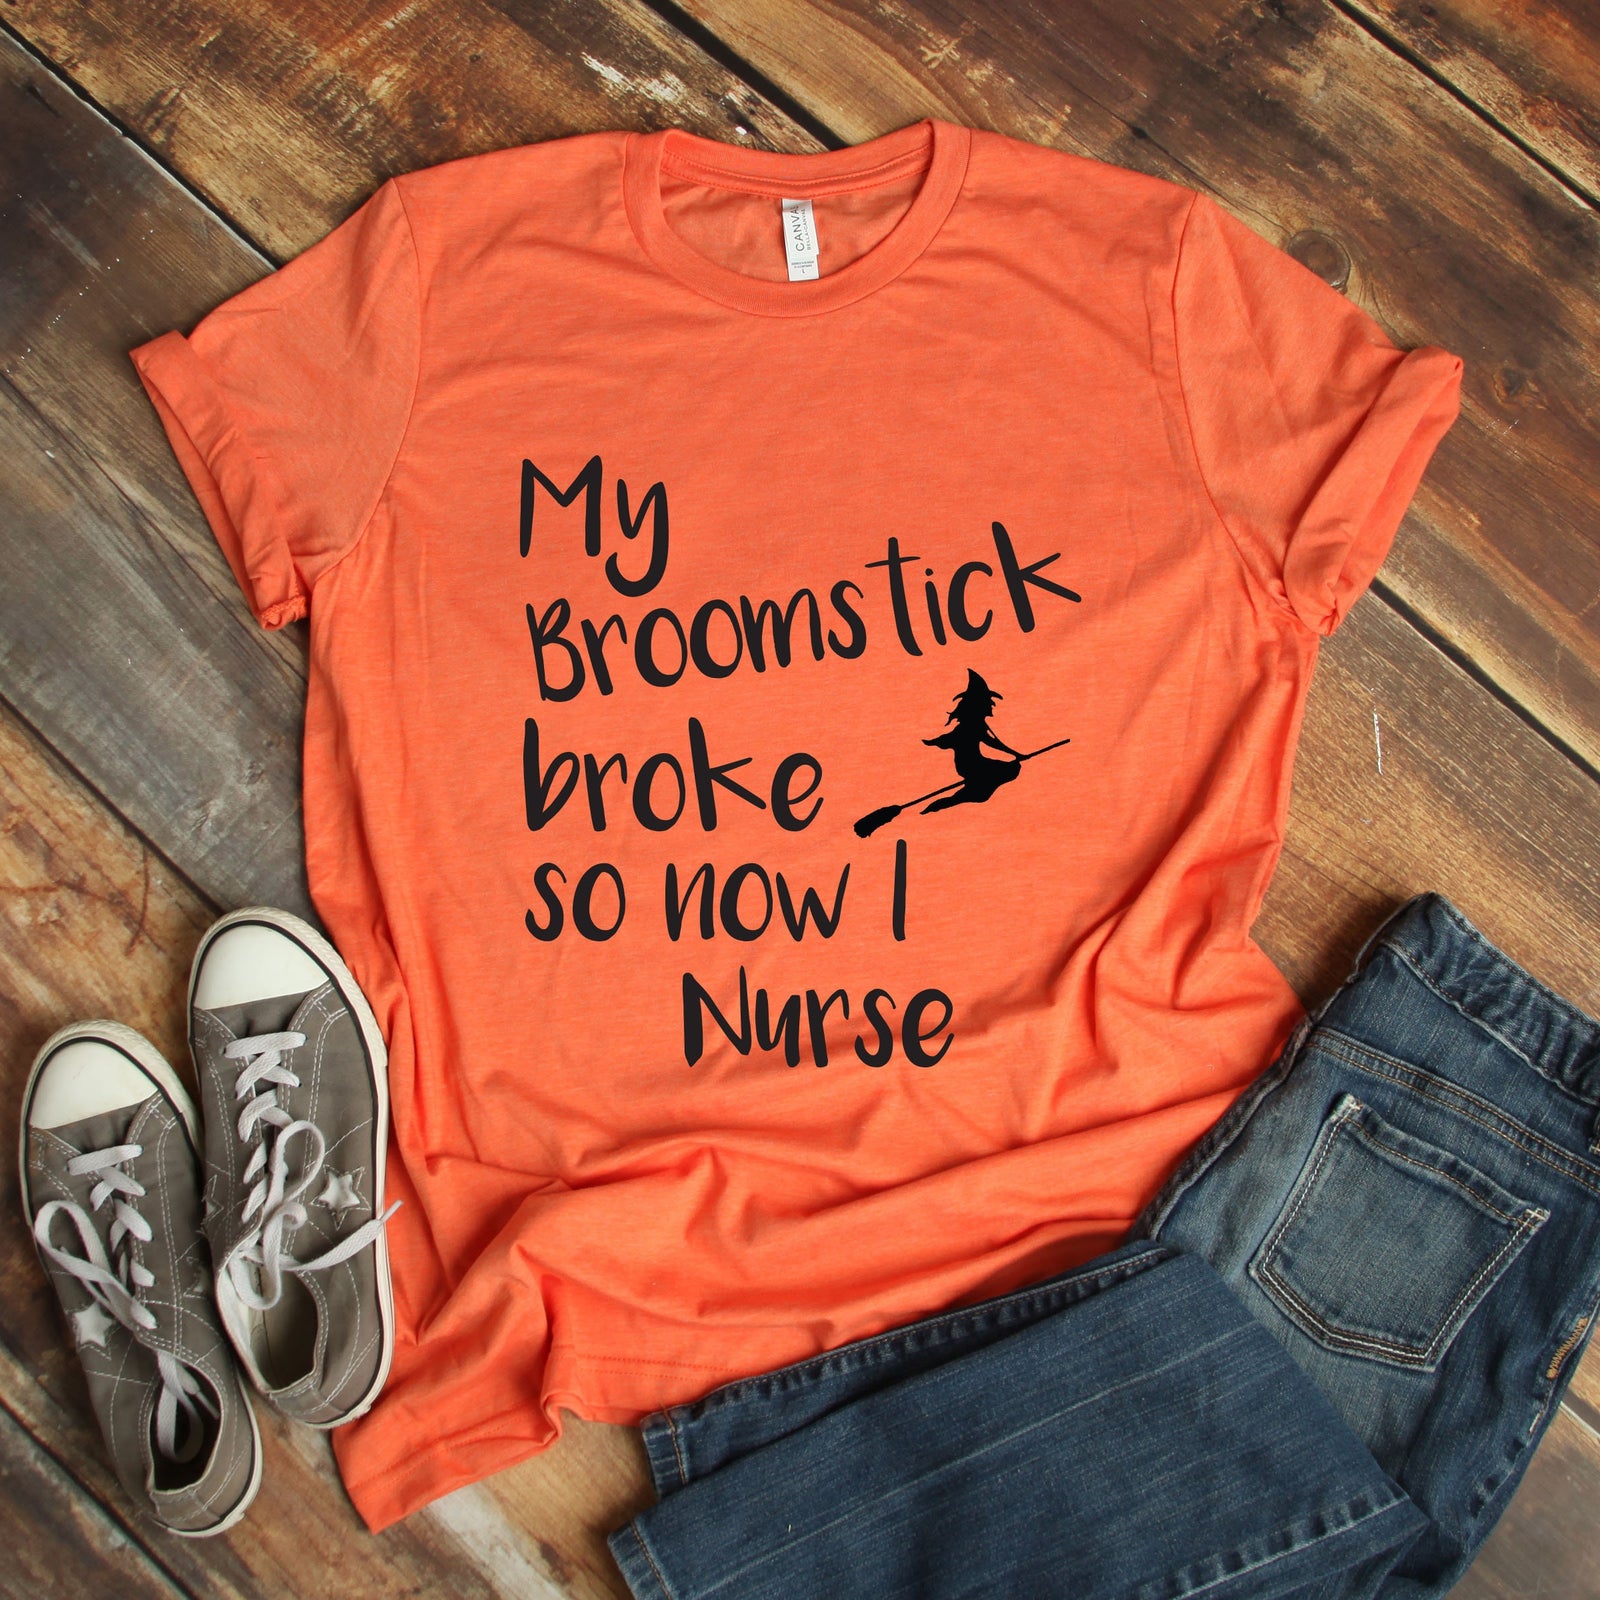 My Broomstick Broke So Now I Nurse - Happy Halloween Adult T Shirt - Funny T Shirts